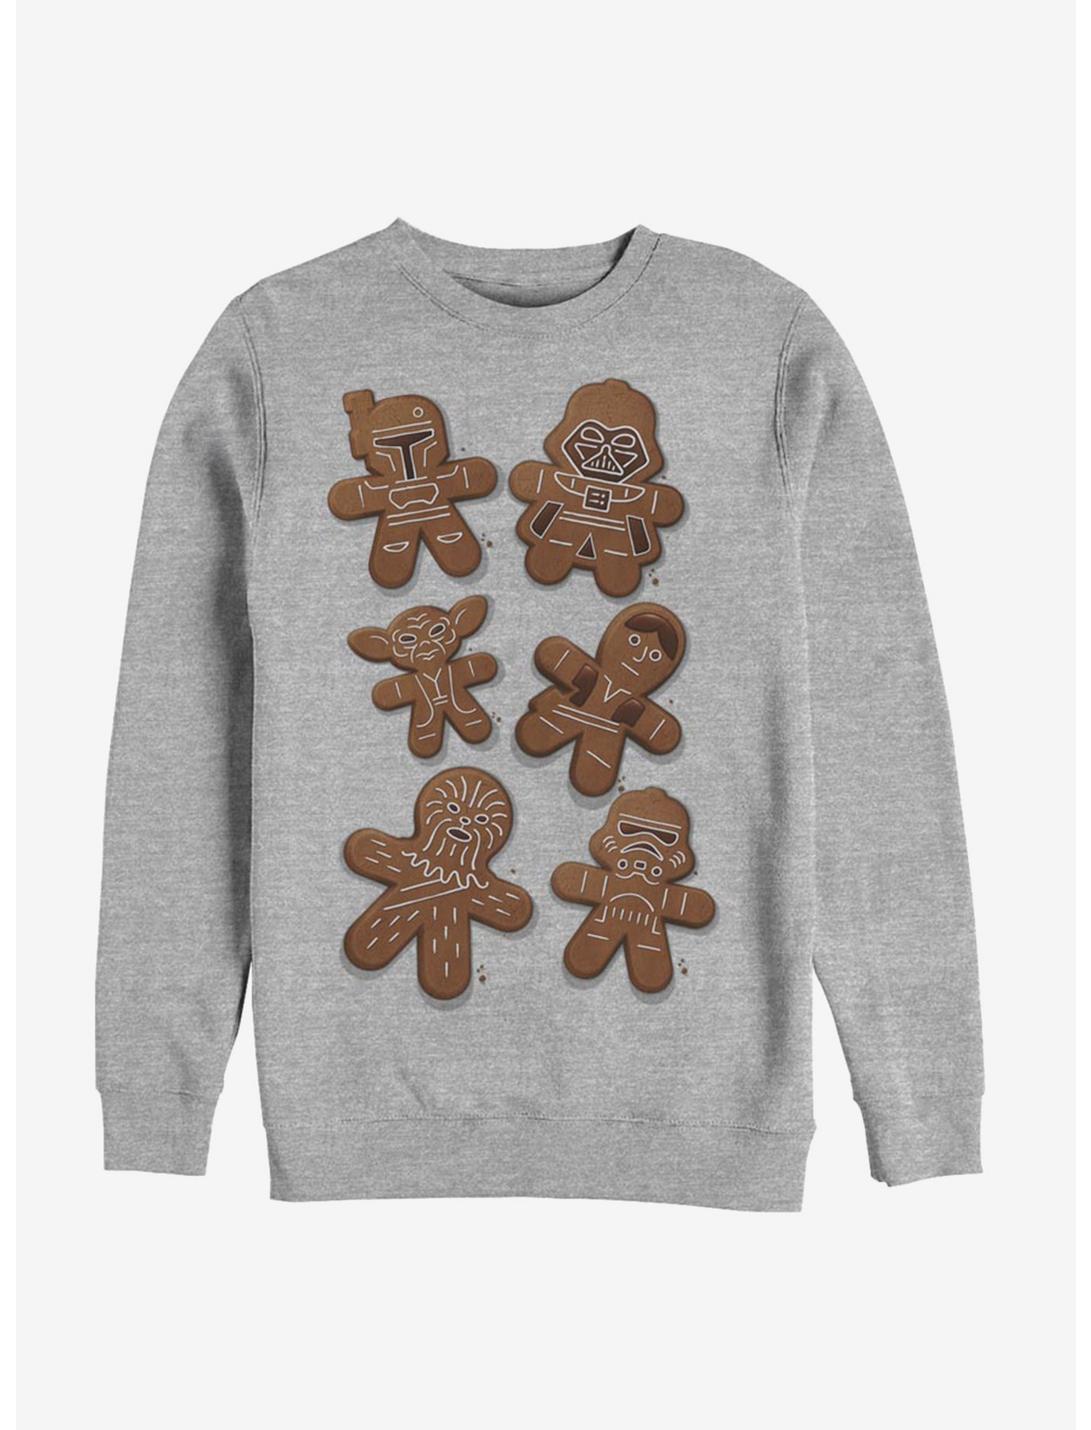 Star Wars Gingerbread Wars Sweatshirt, ATH HTR, hi-res